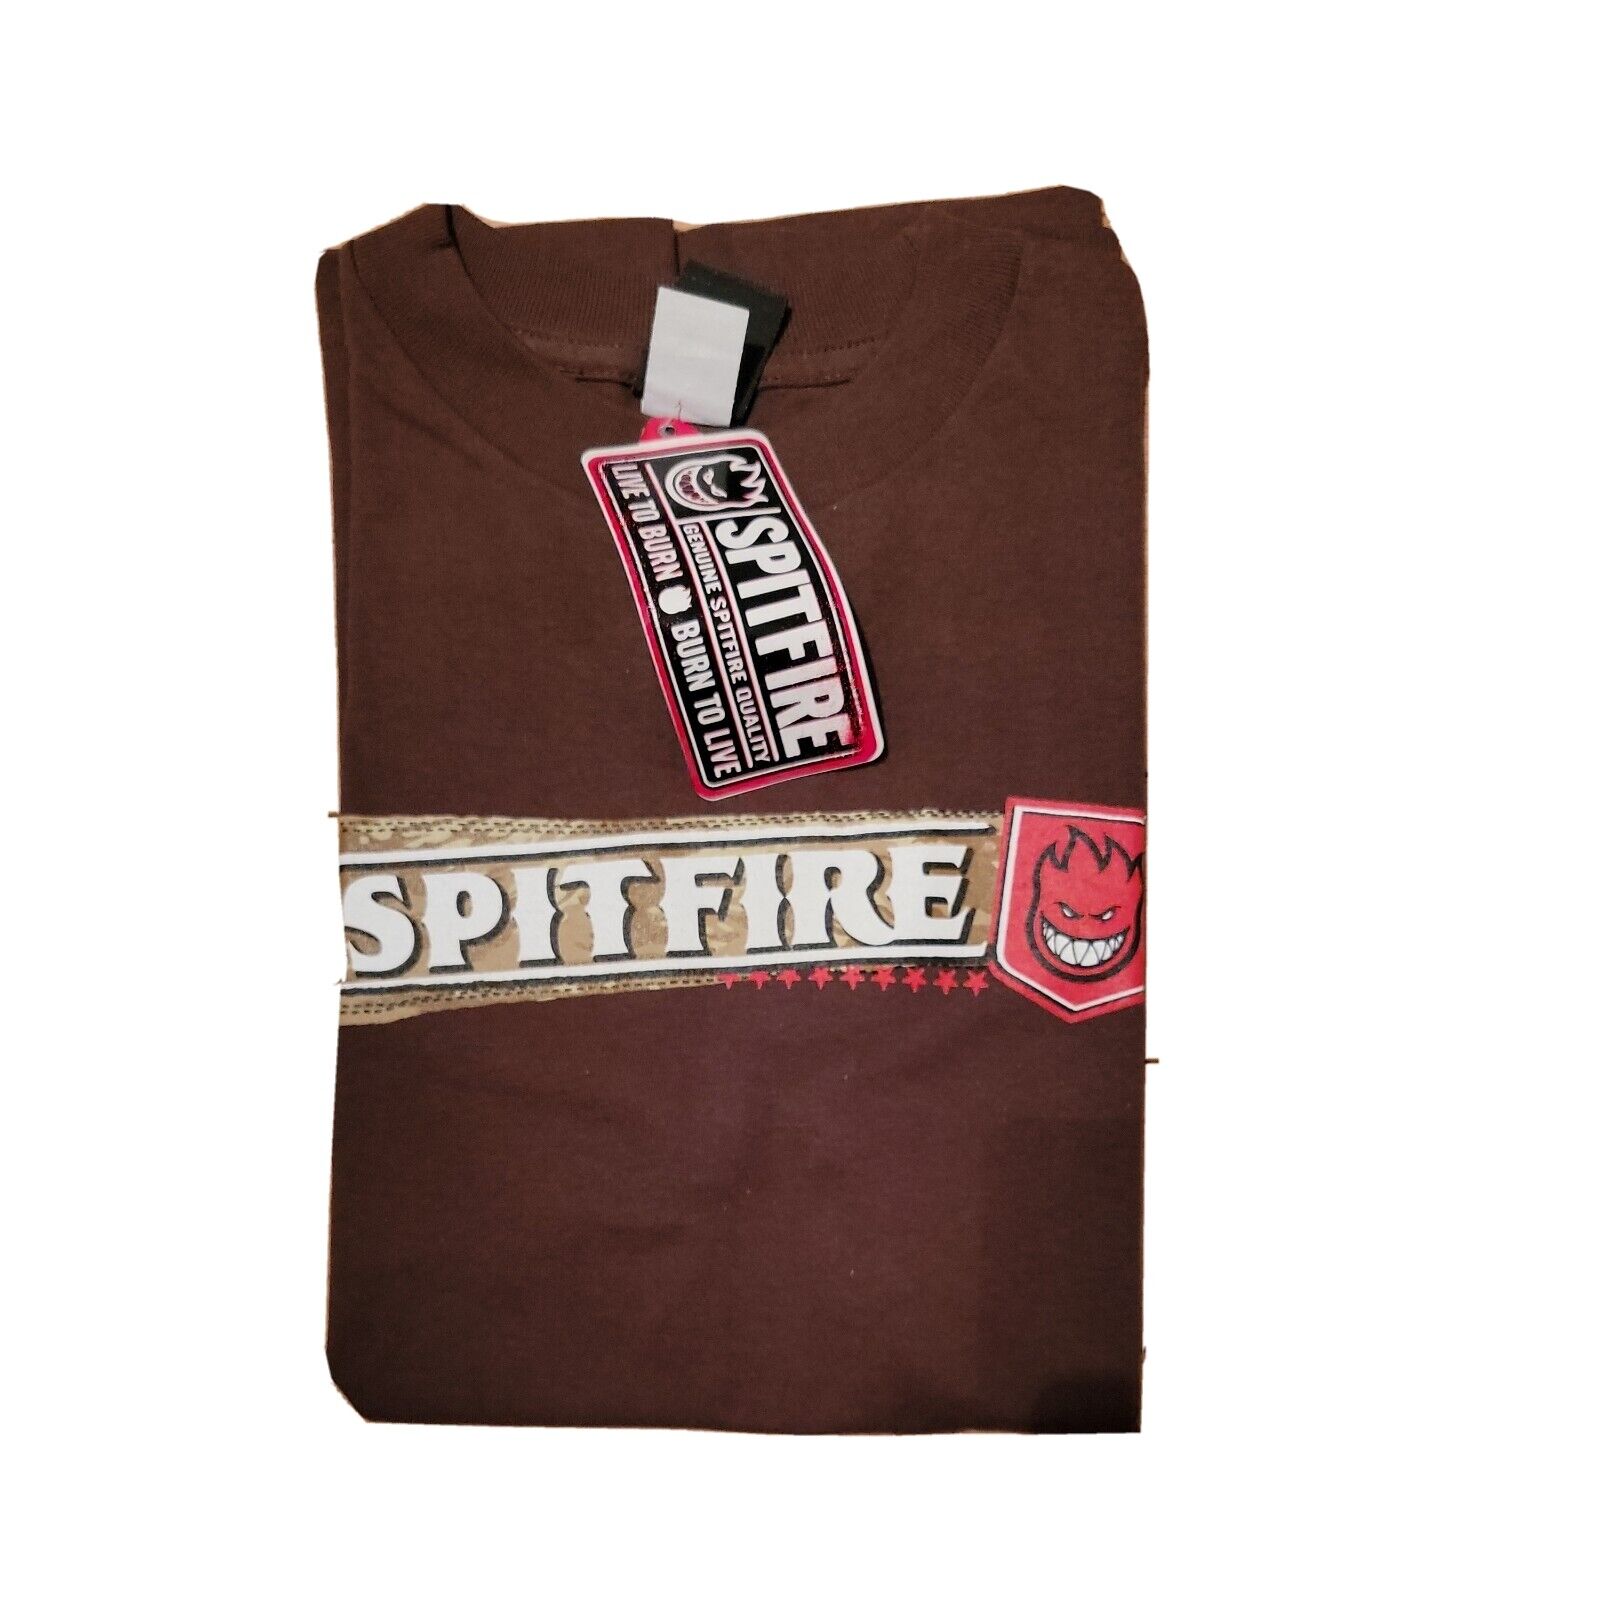 Max 62% OFF Spitfire Skateboard Wheels Shirt wholesale Chocolate Mens Dark